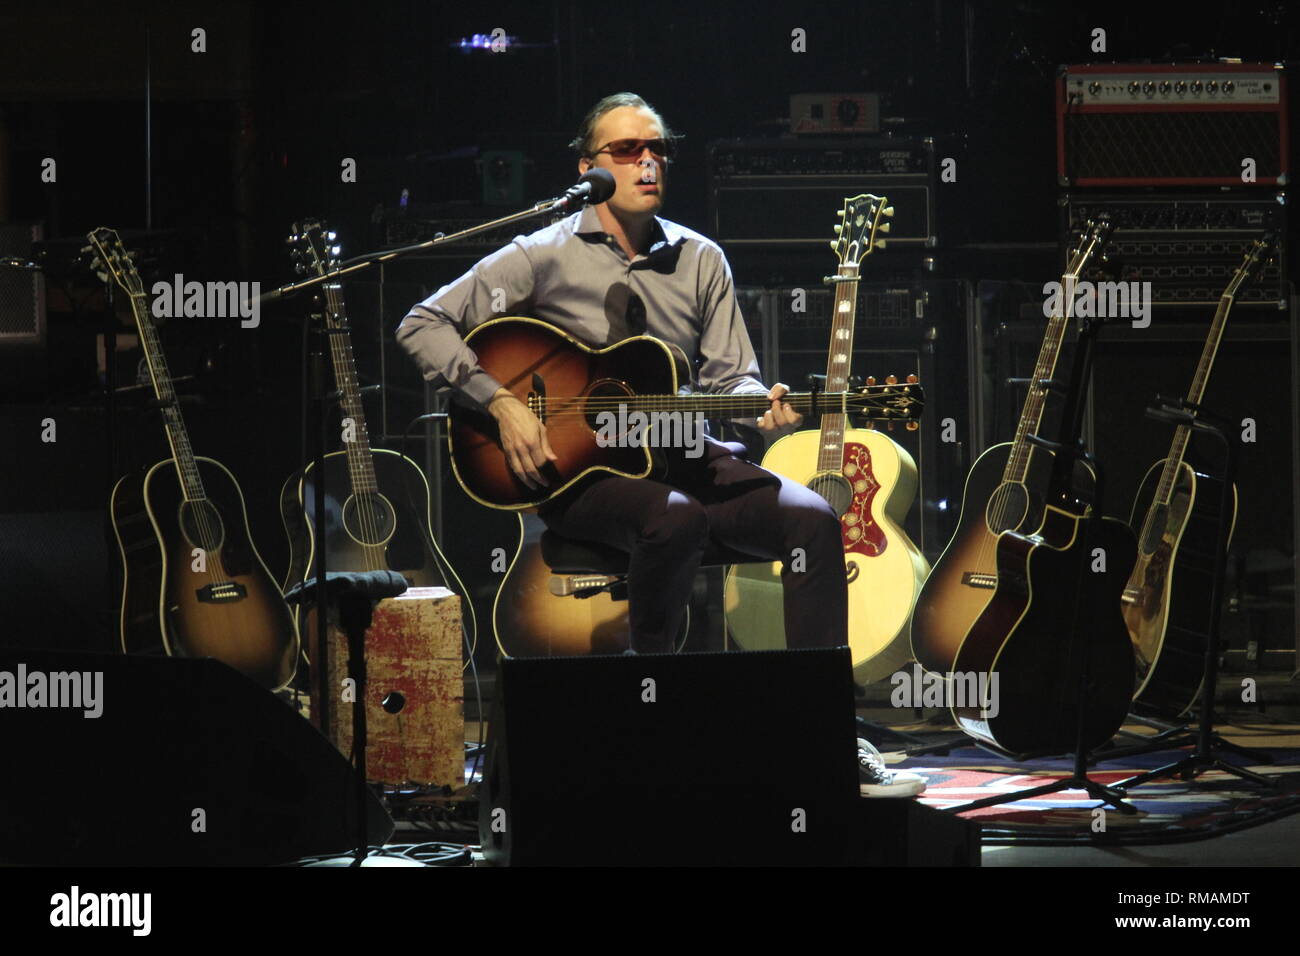 Blues rock guitarist and singer Joe Bonnamassa is shown performing on ...